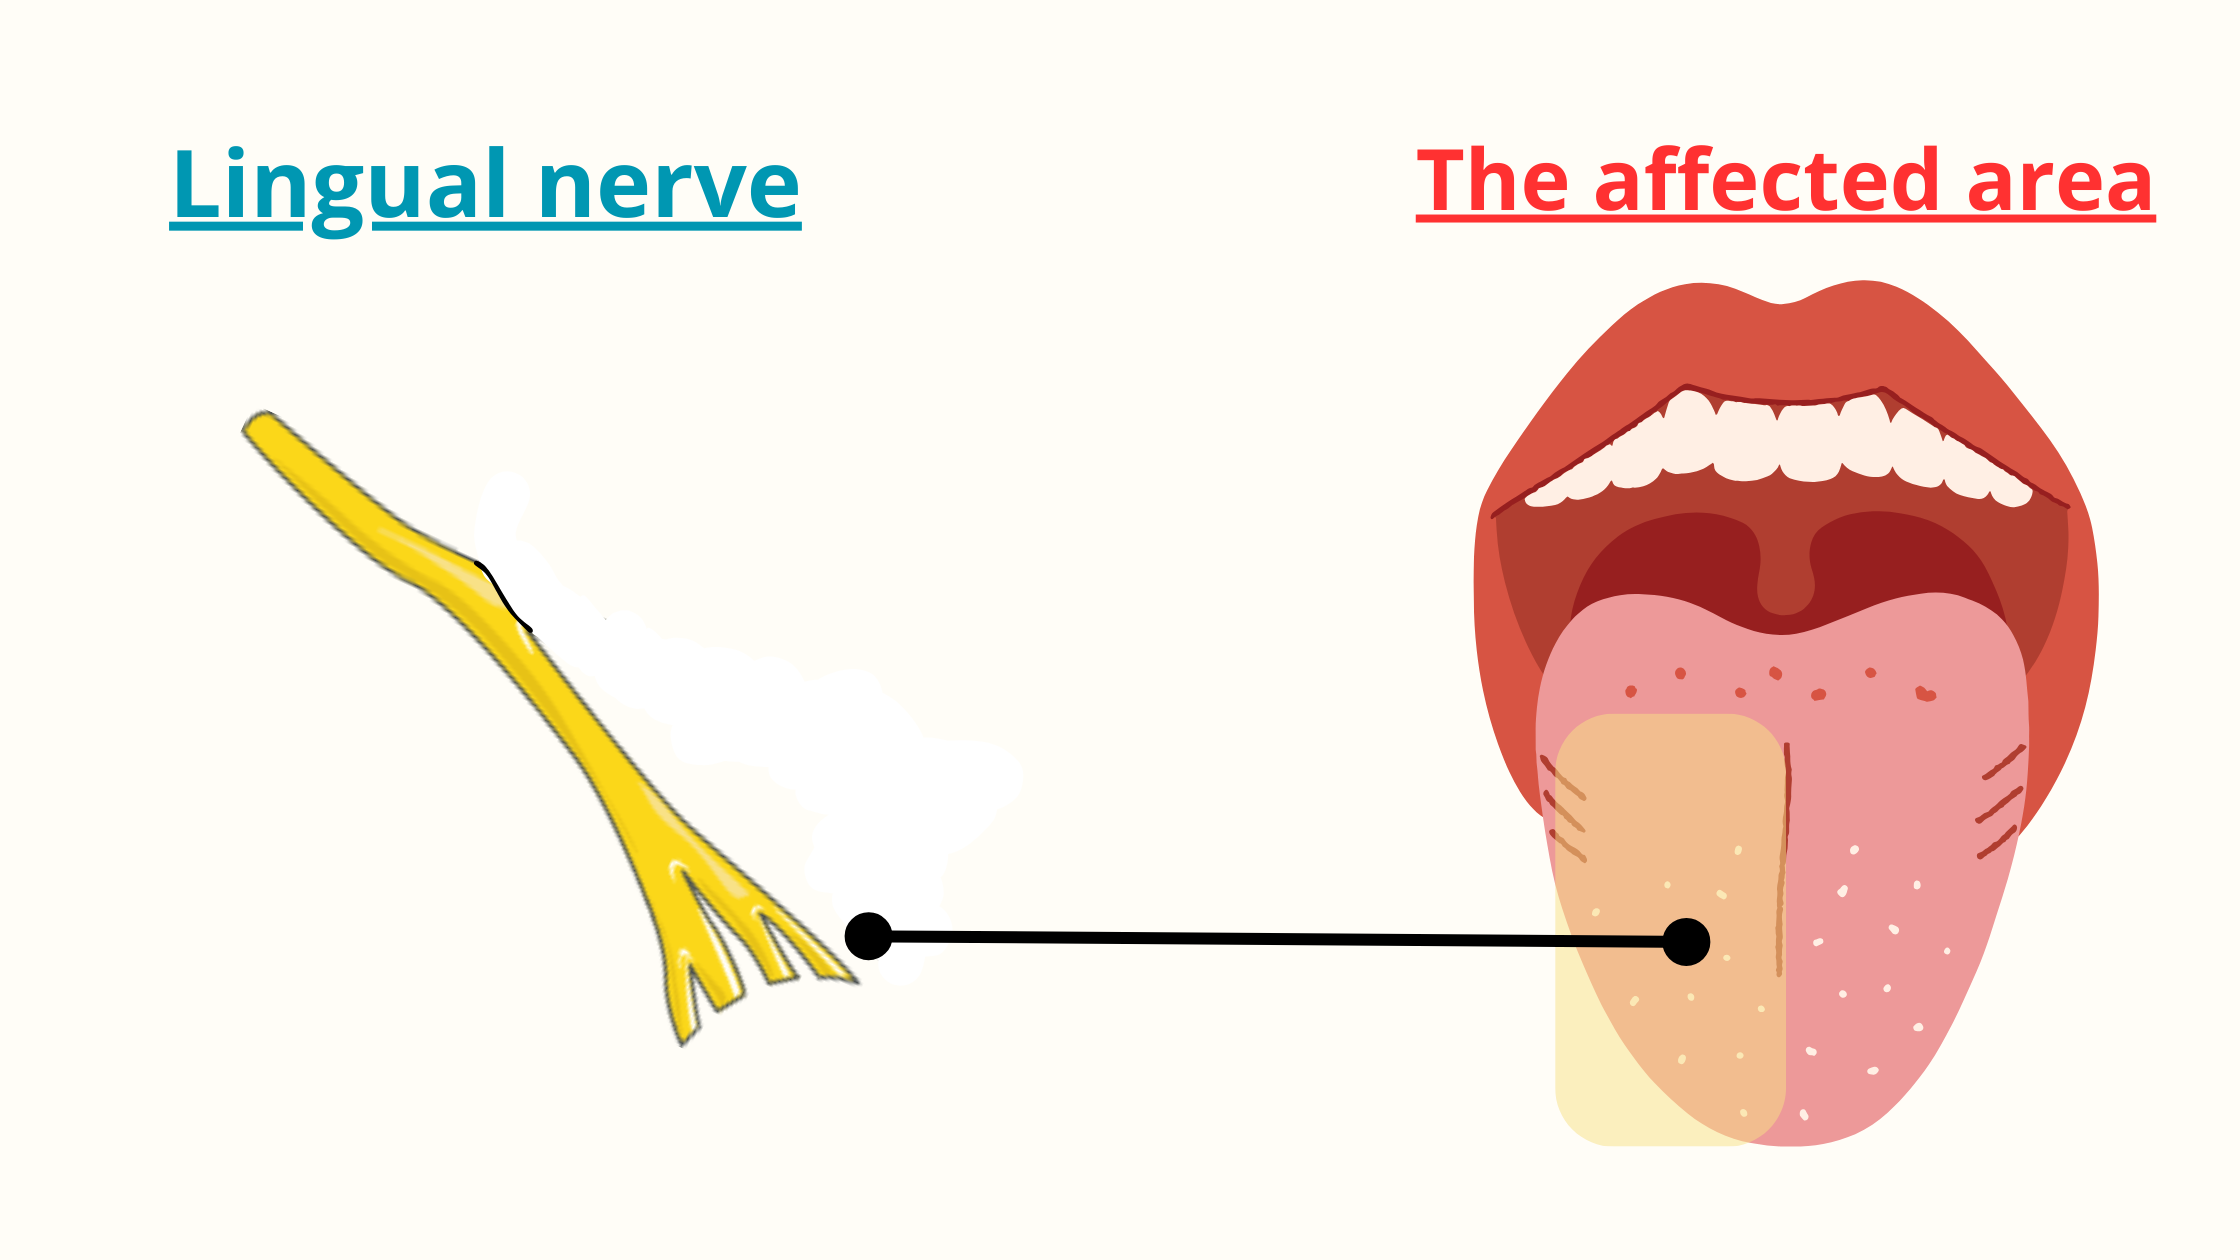 Lingual nerve damage effects